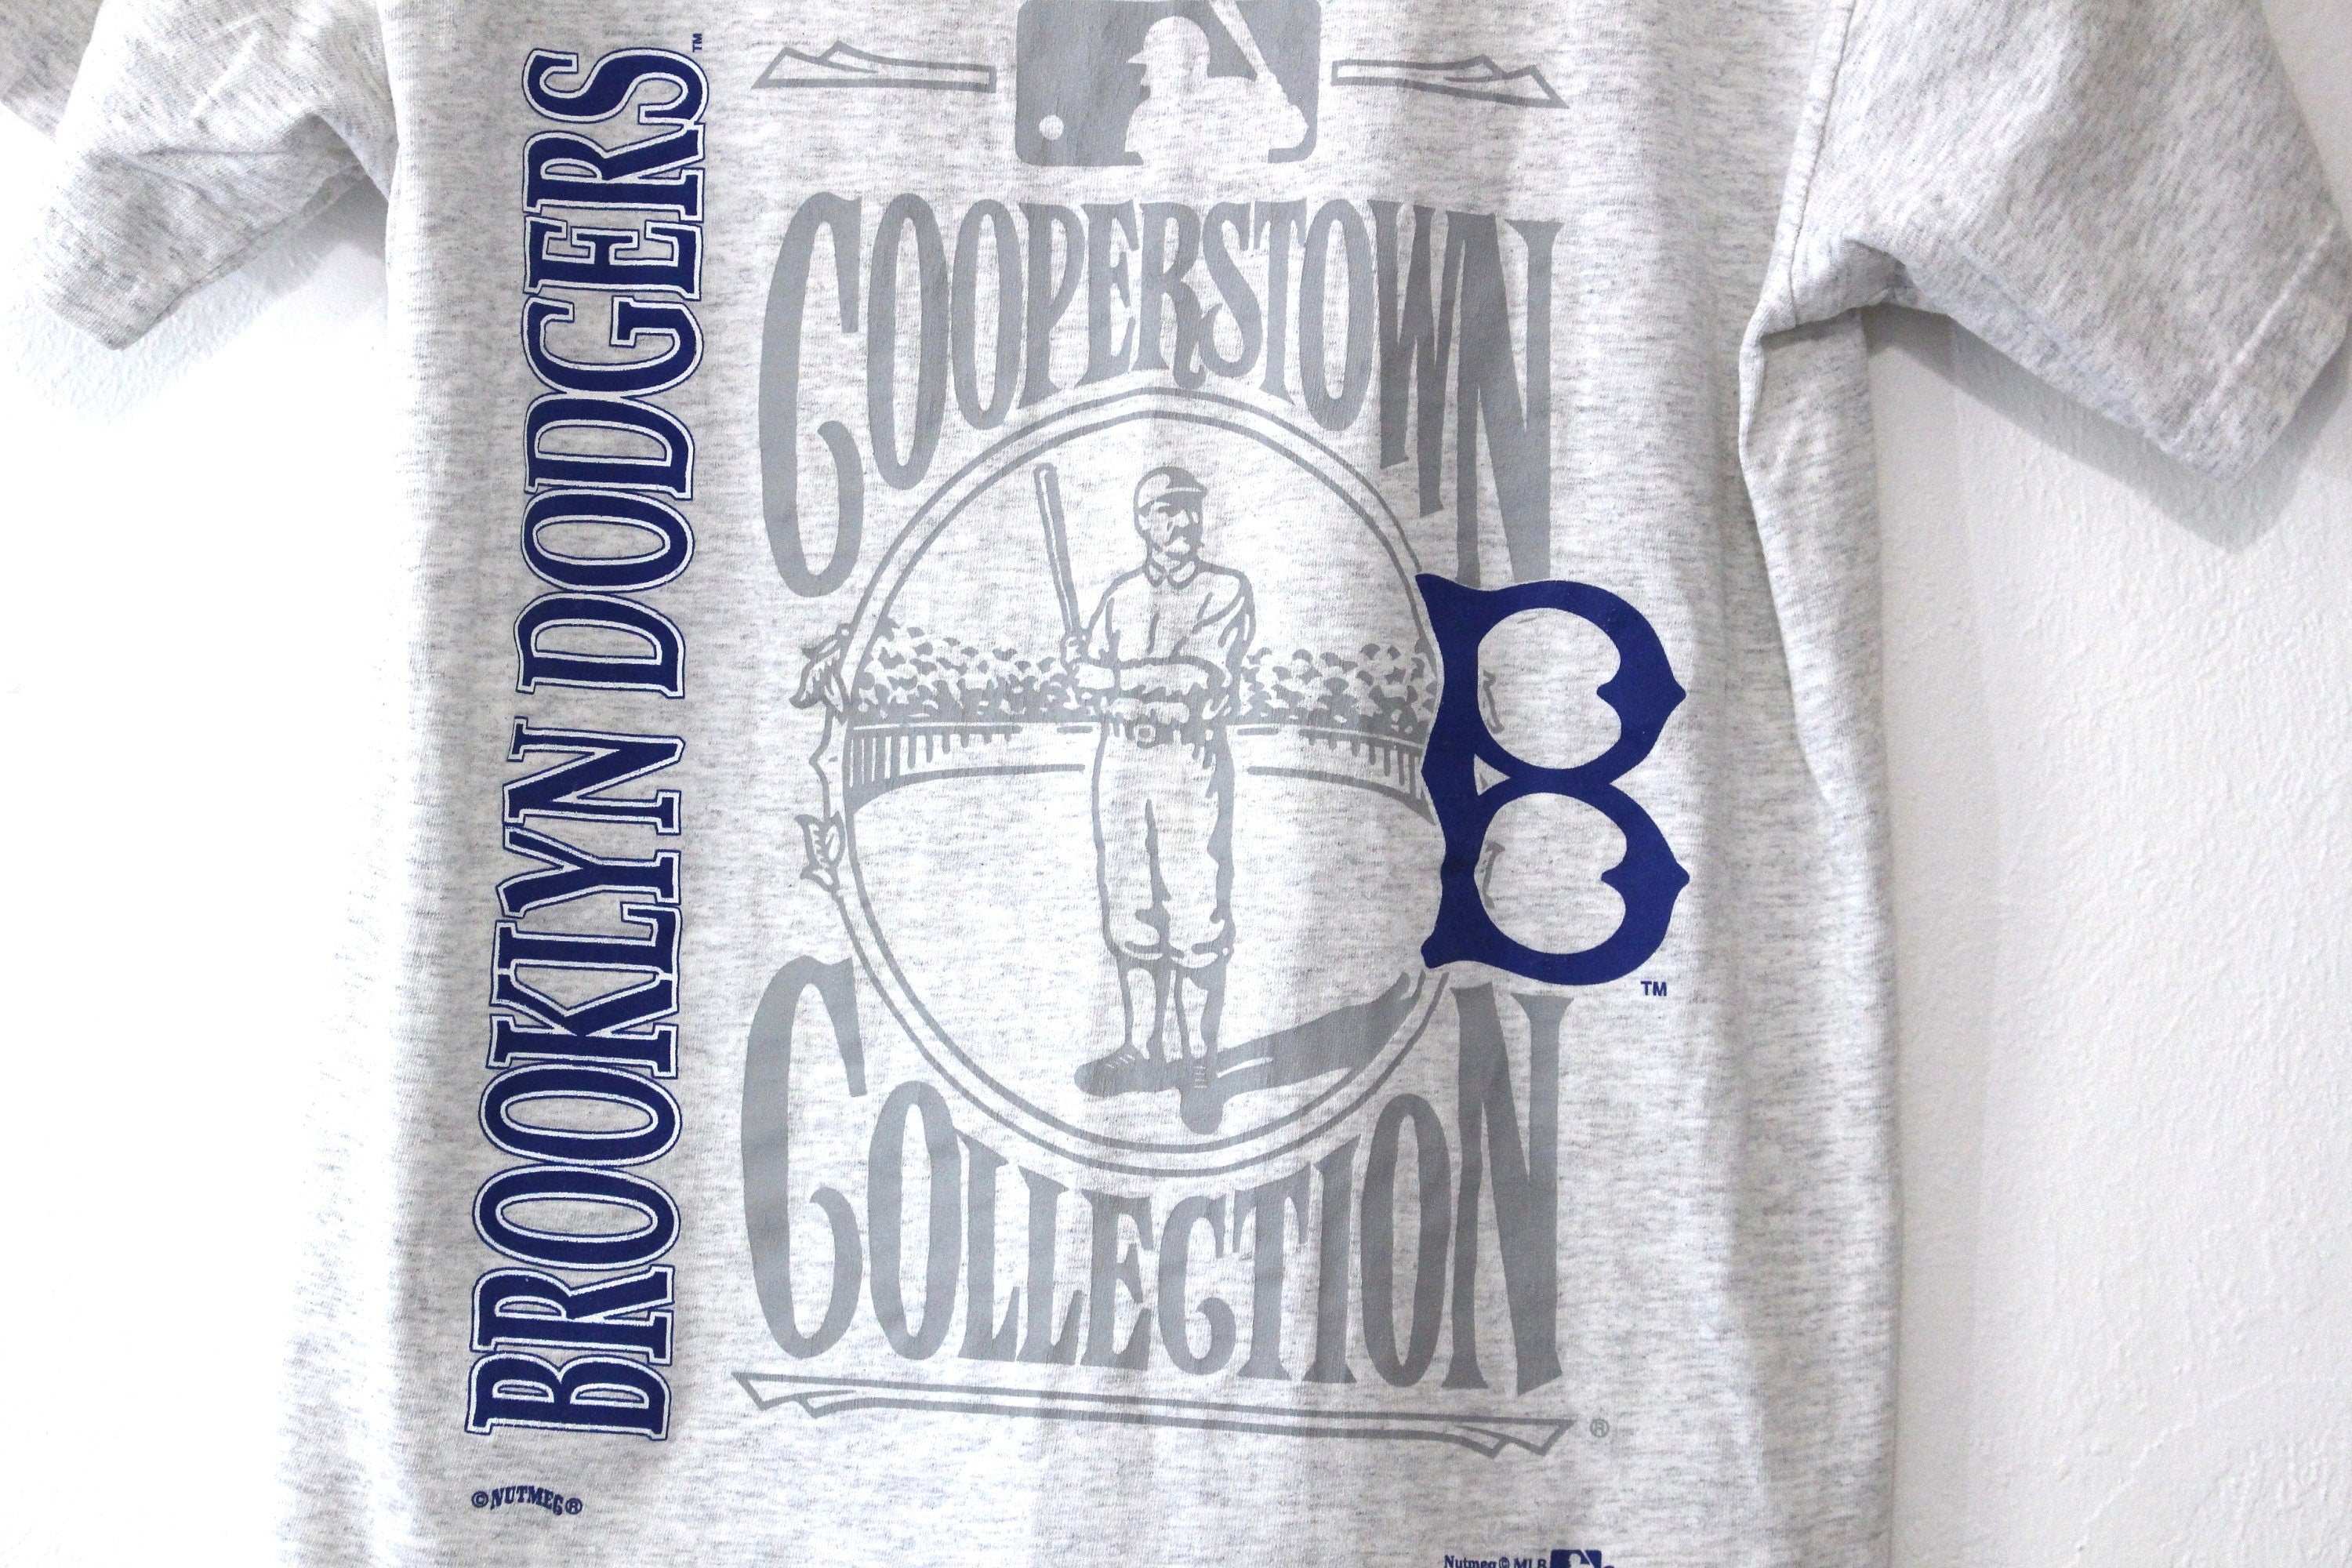 Vintage Brooklyn Dodgers Baseball T-Shirt